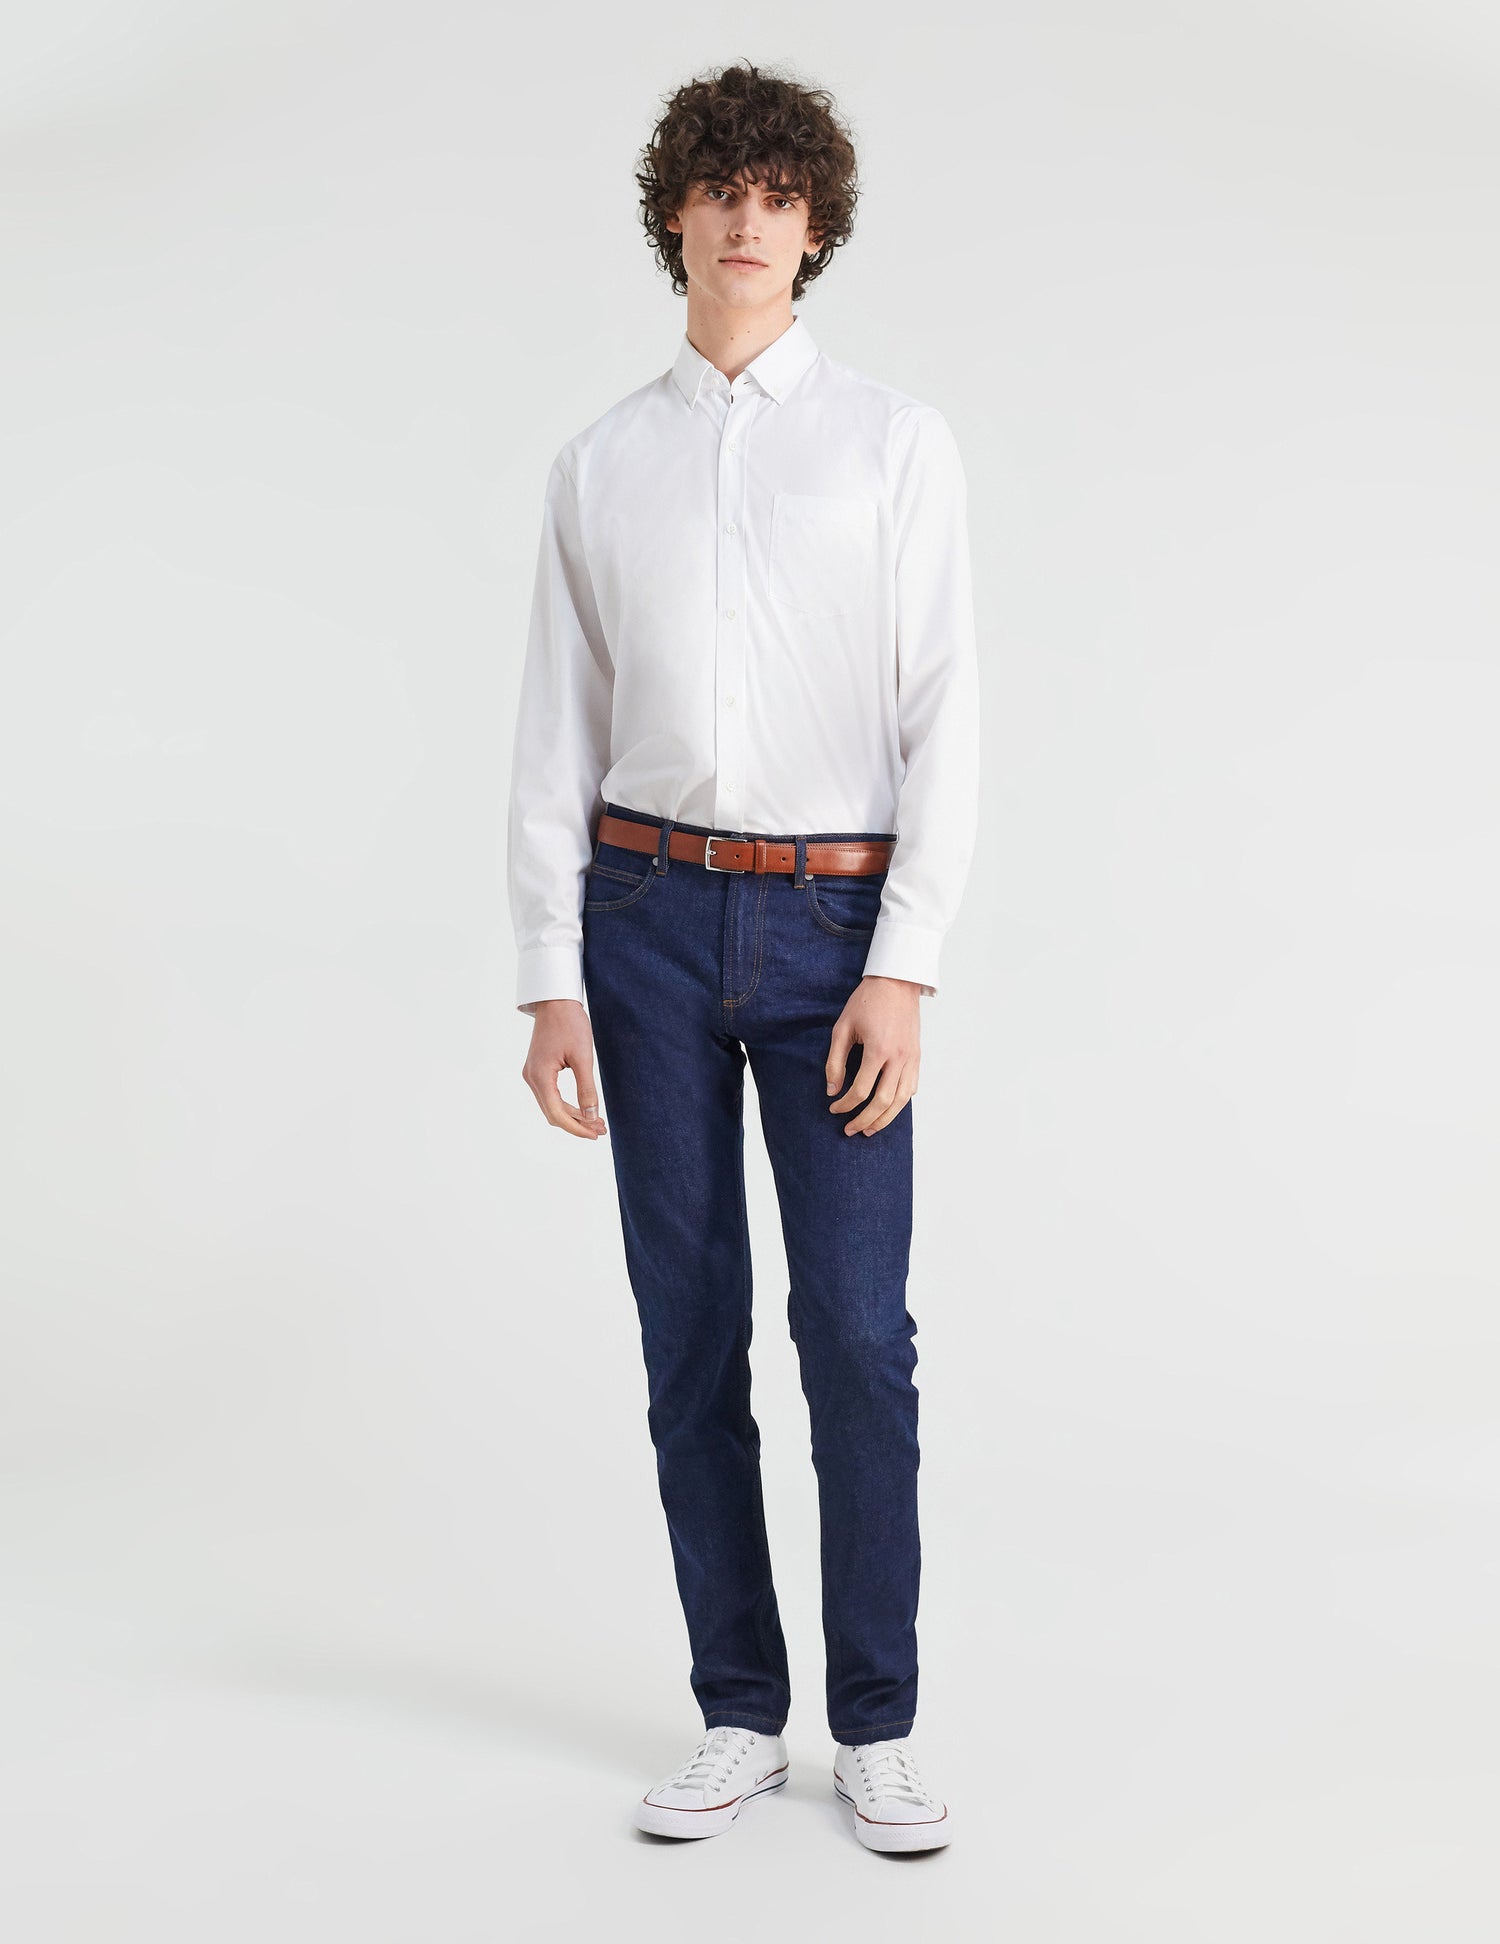 Classic white shirt - Poplin - American Collar#4